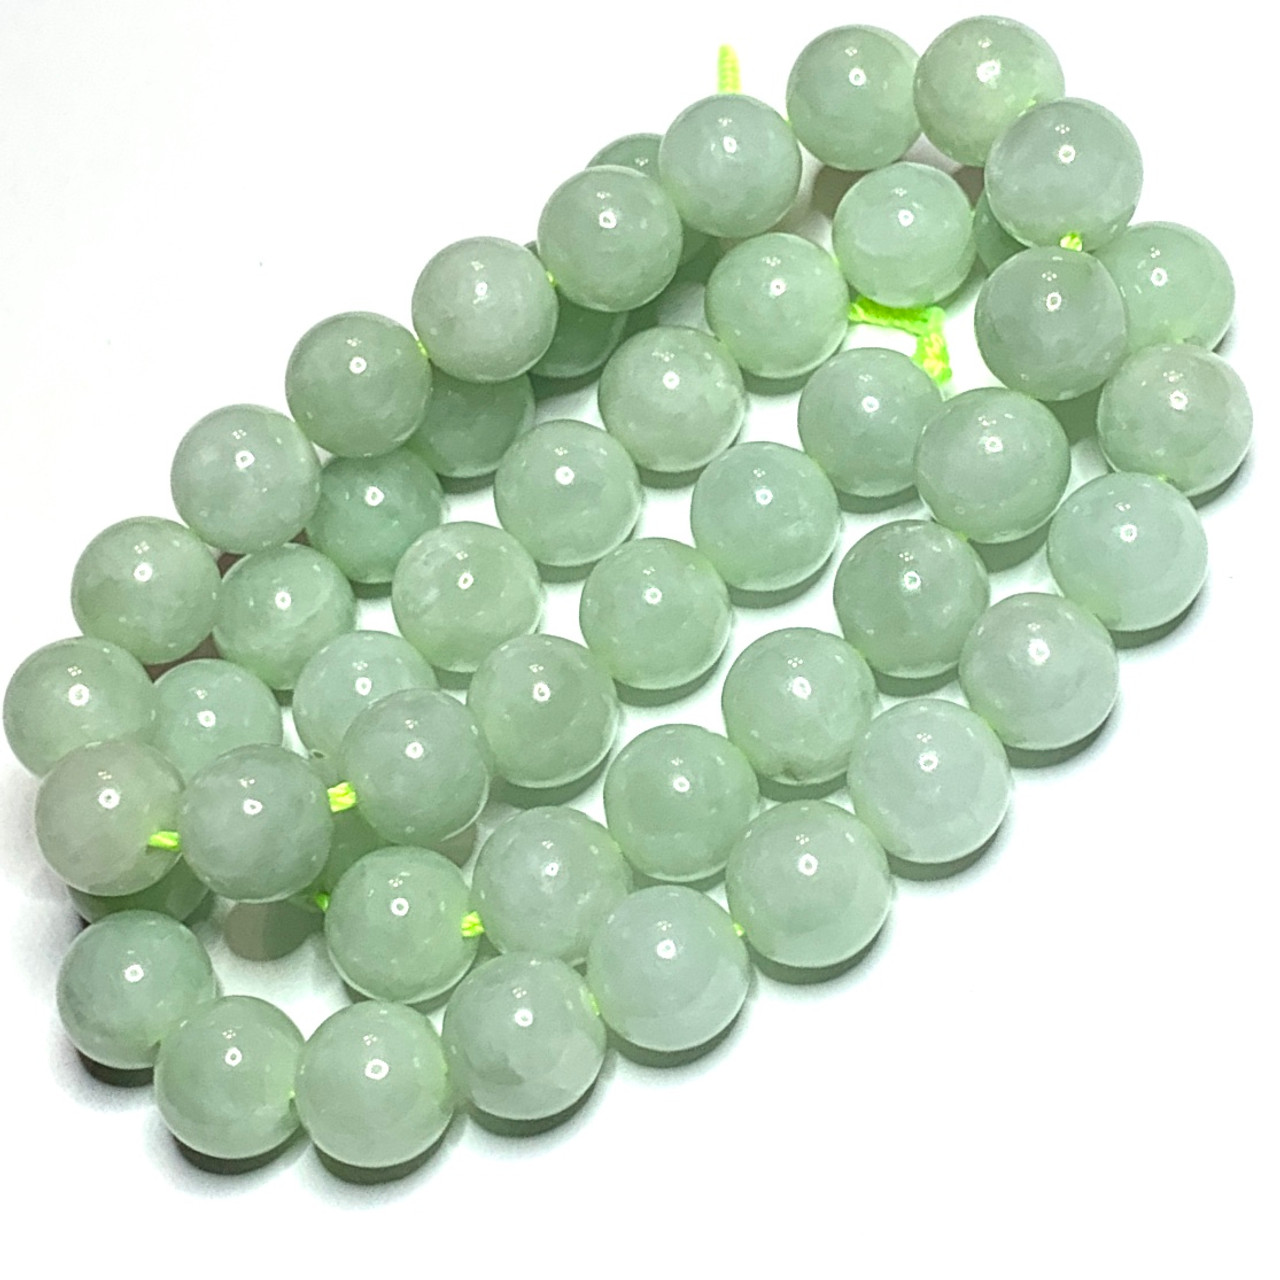 Highly Polished Burma Jade Round Beads-8mm